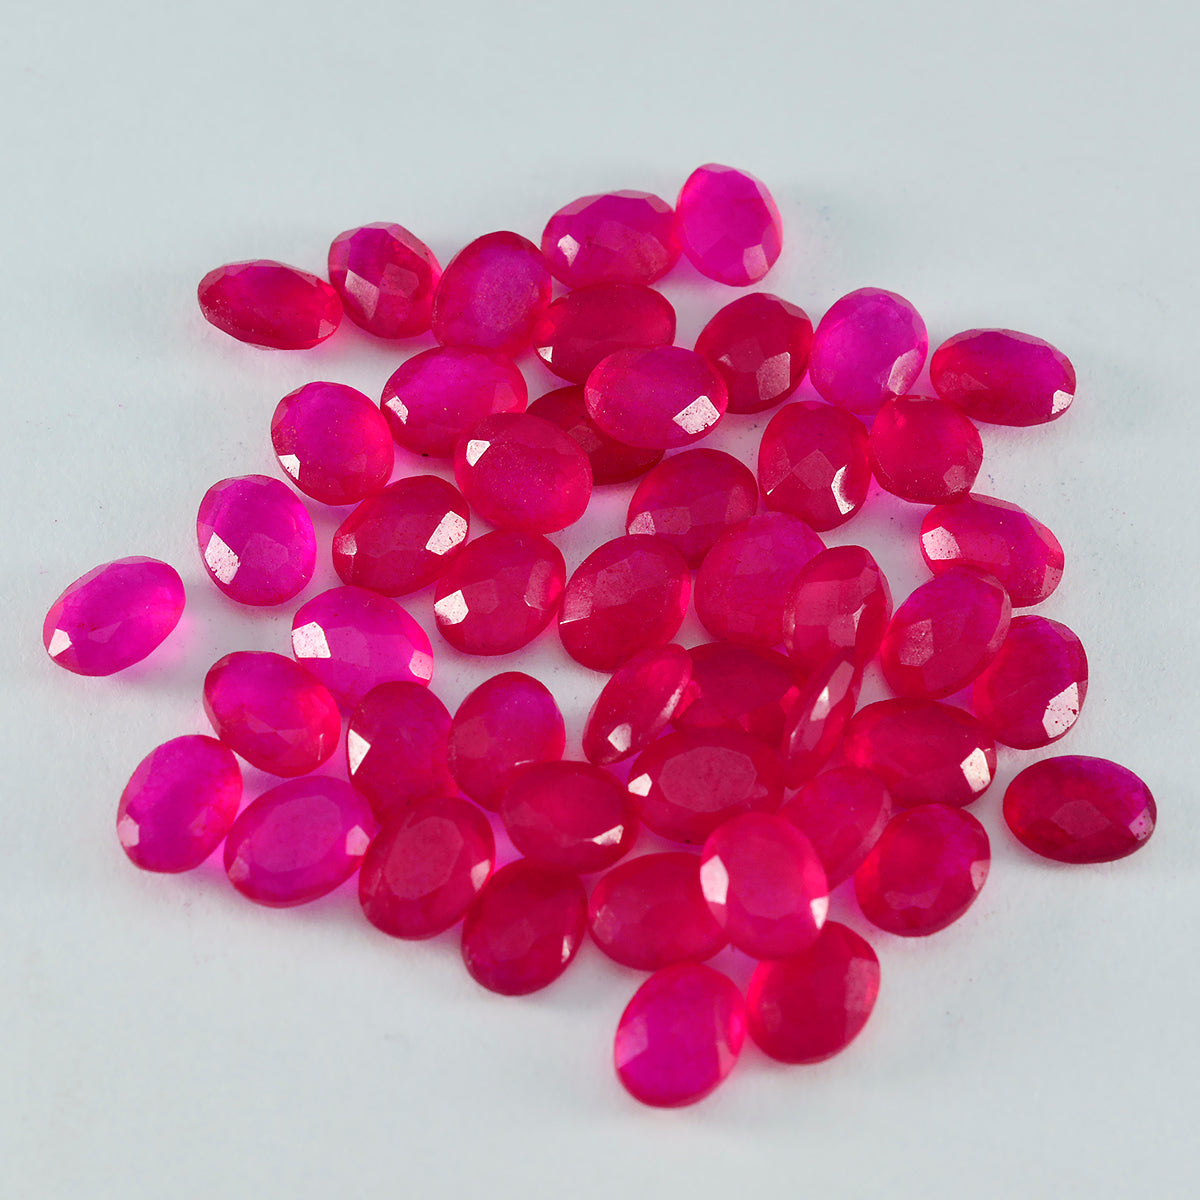 Riyogems 1PC echte rode jaspis gefacetteerd 5x7 mm ovale vorm goede kwaliteit losse edelsteen